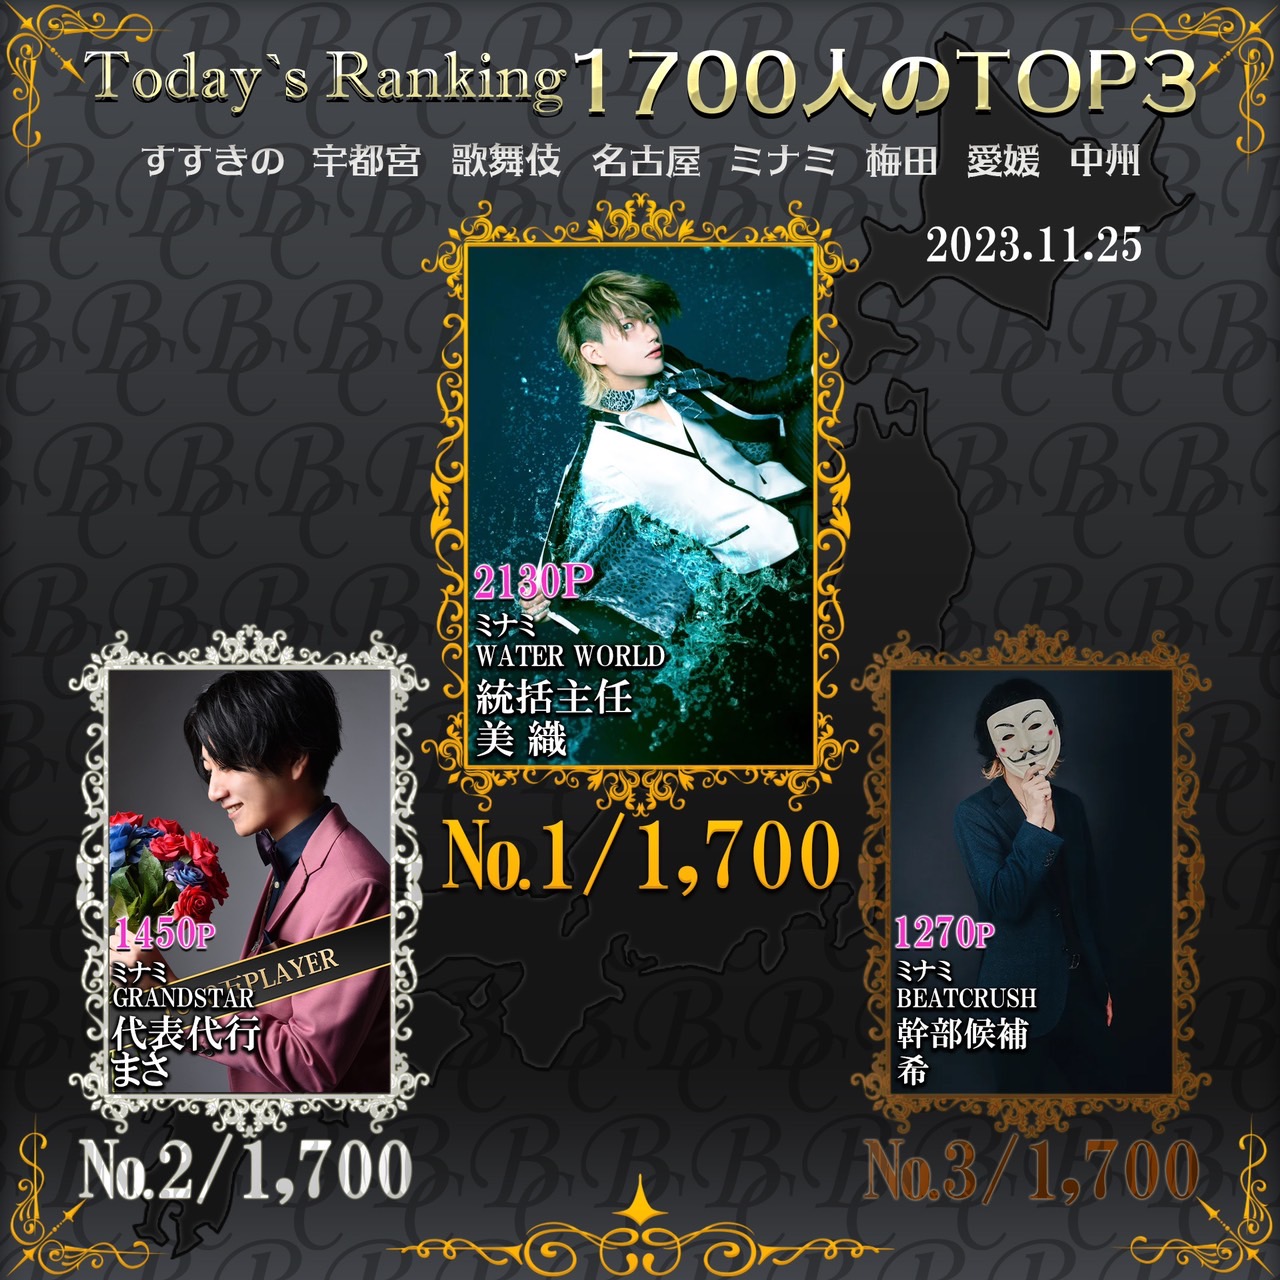 11/25 Today’s Ranking